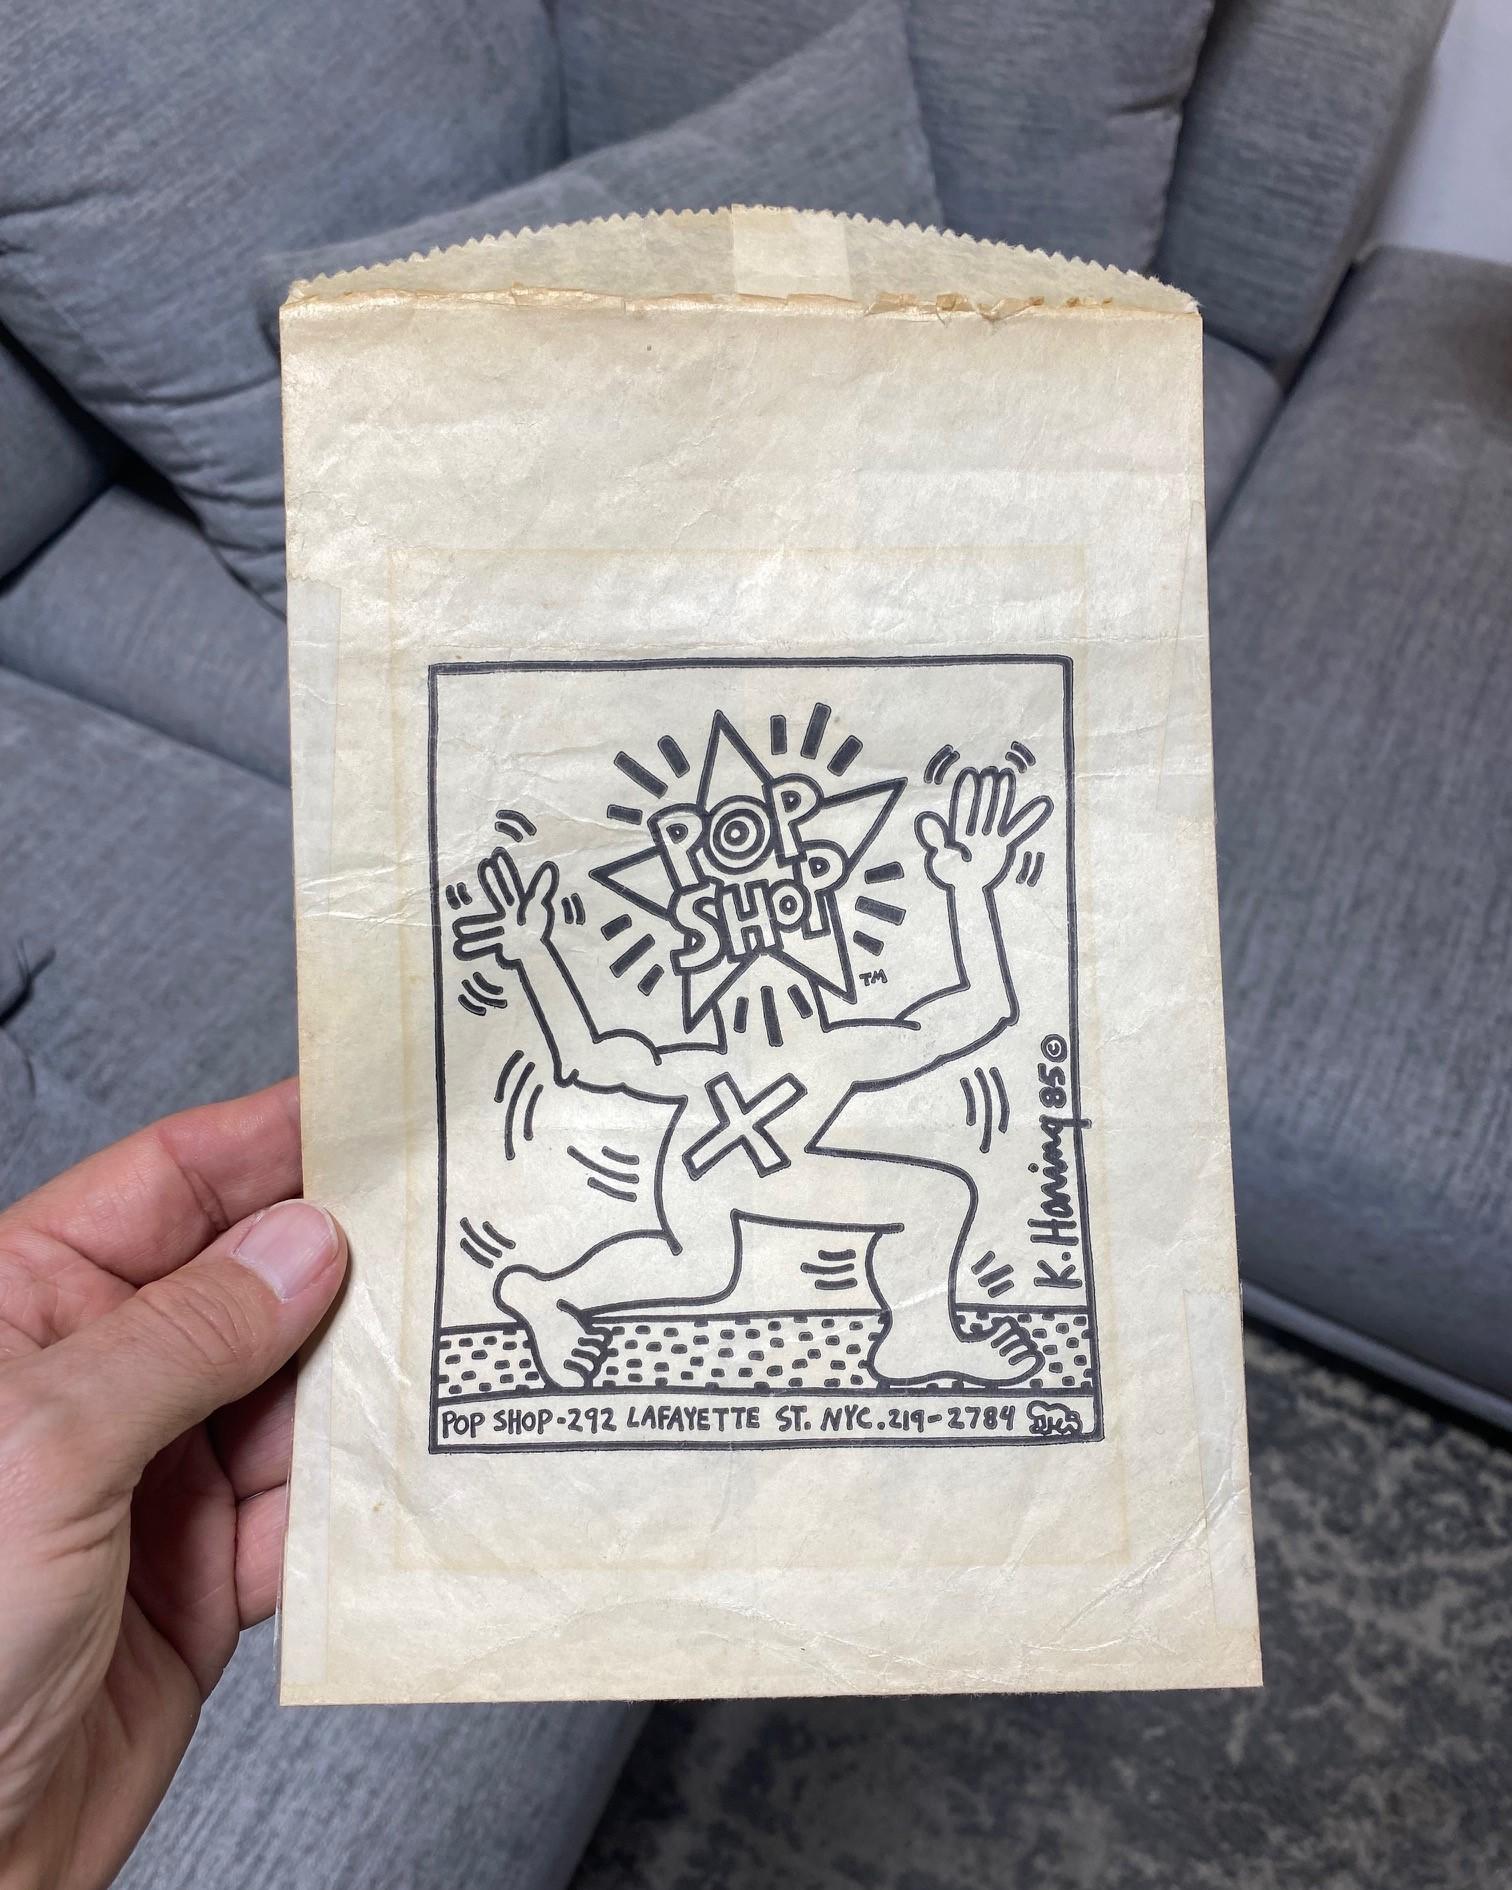 Keith Haring Original New York City Pop Shop Lithograph Bag With Bonus, 1980s For Sale 7